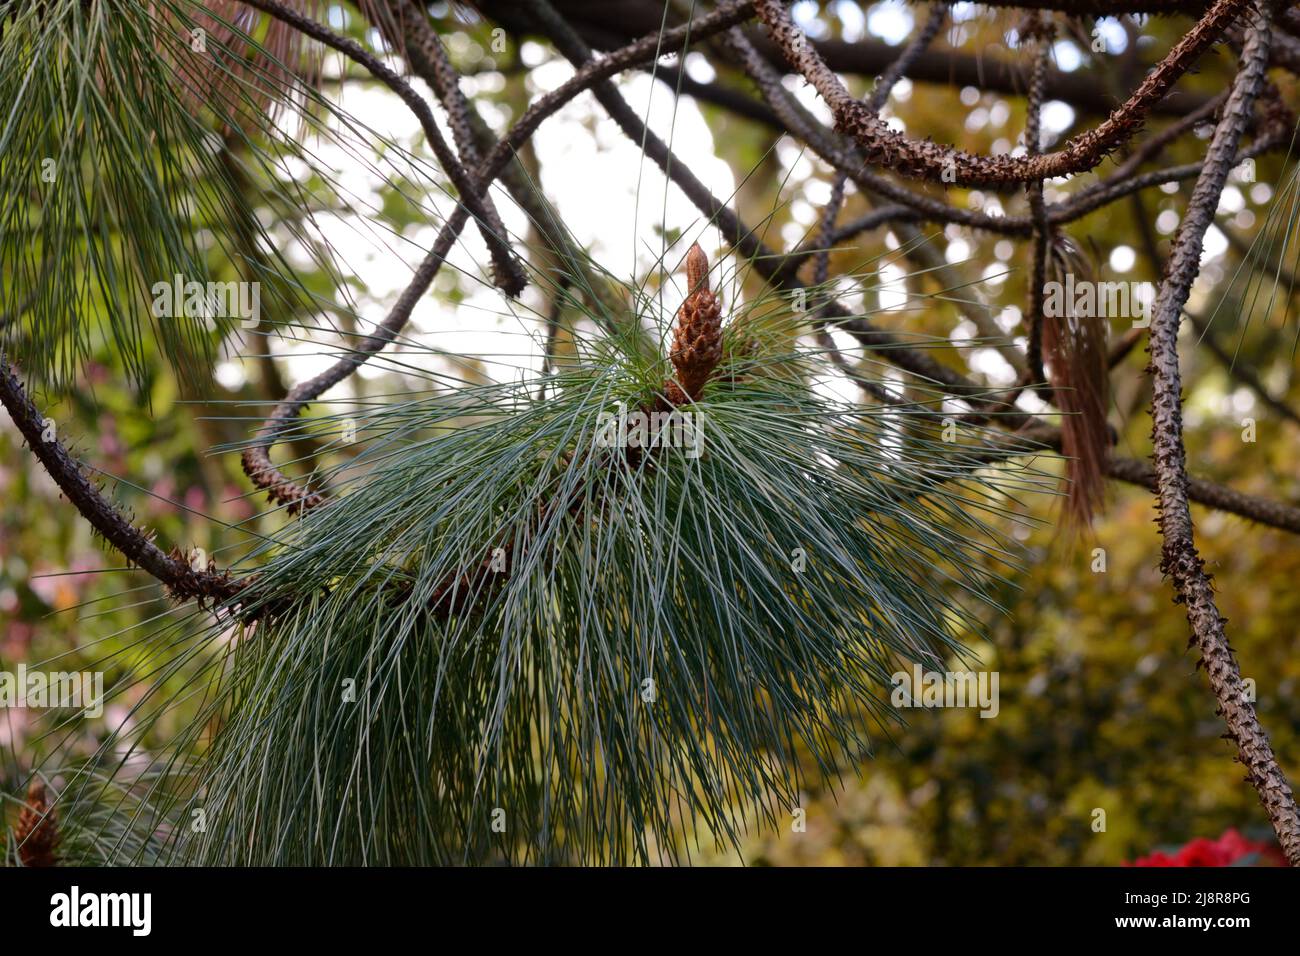 Lange nadelartige Blätter der Pinus montezuma-Baumkiefer Stockfoto